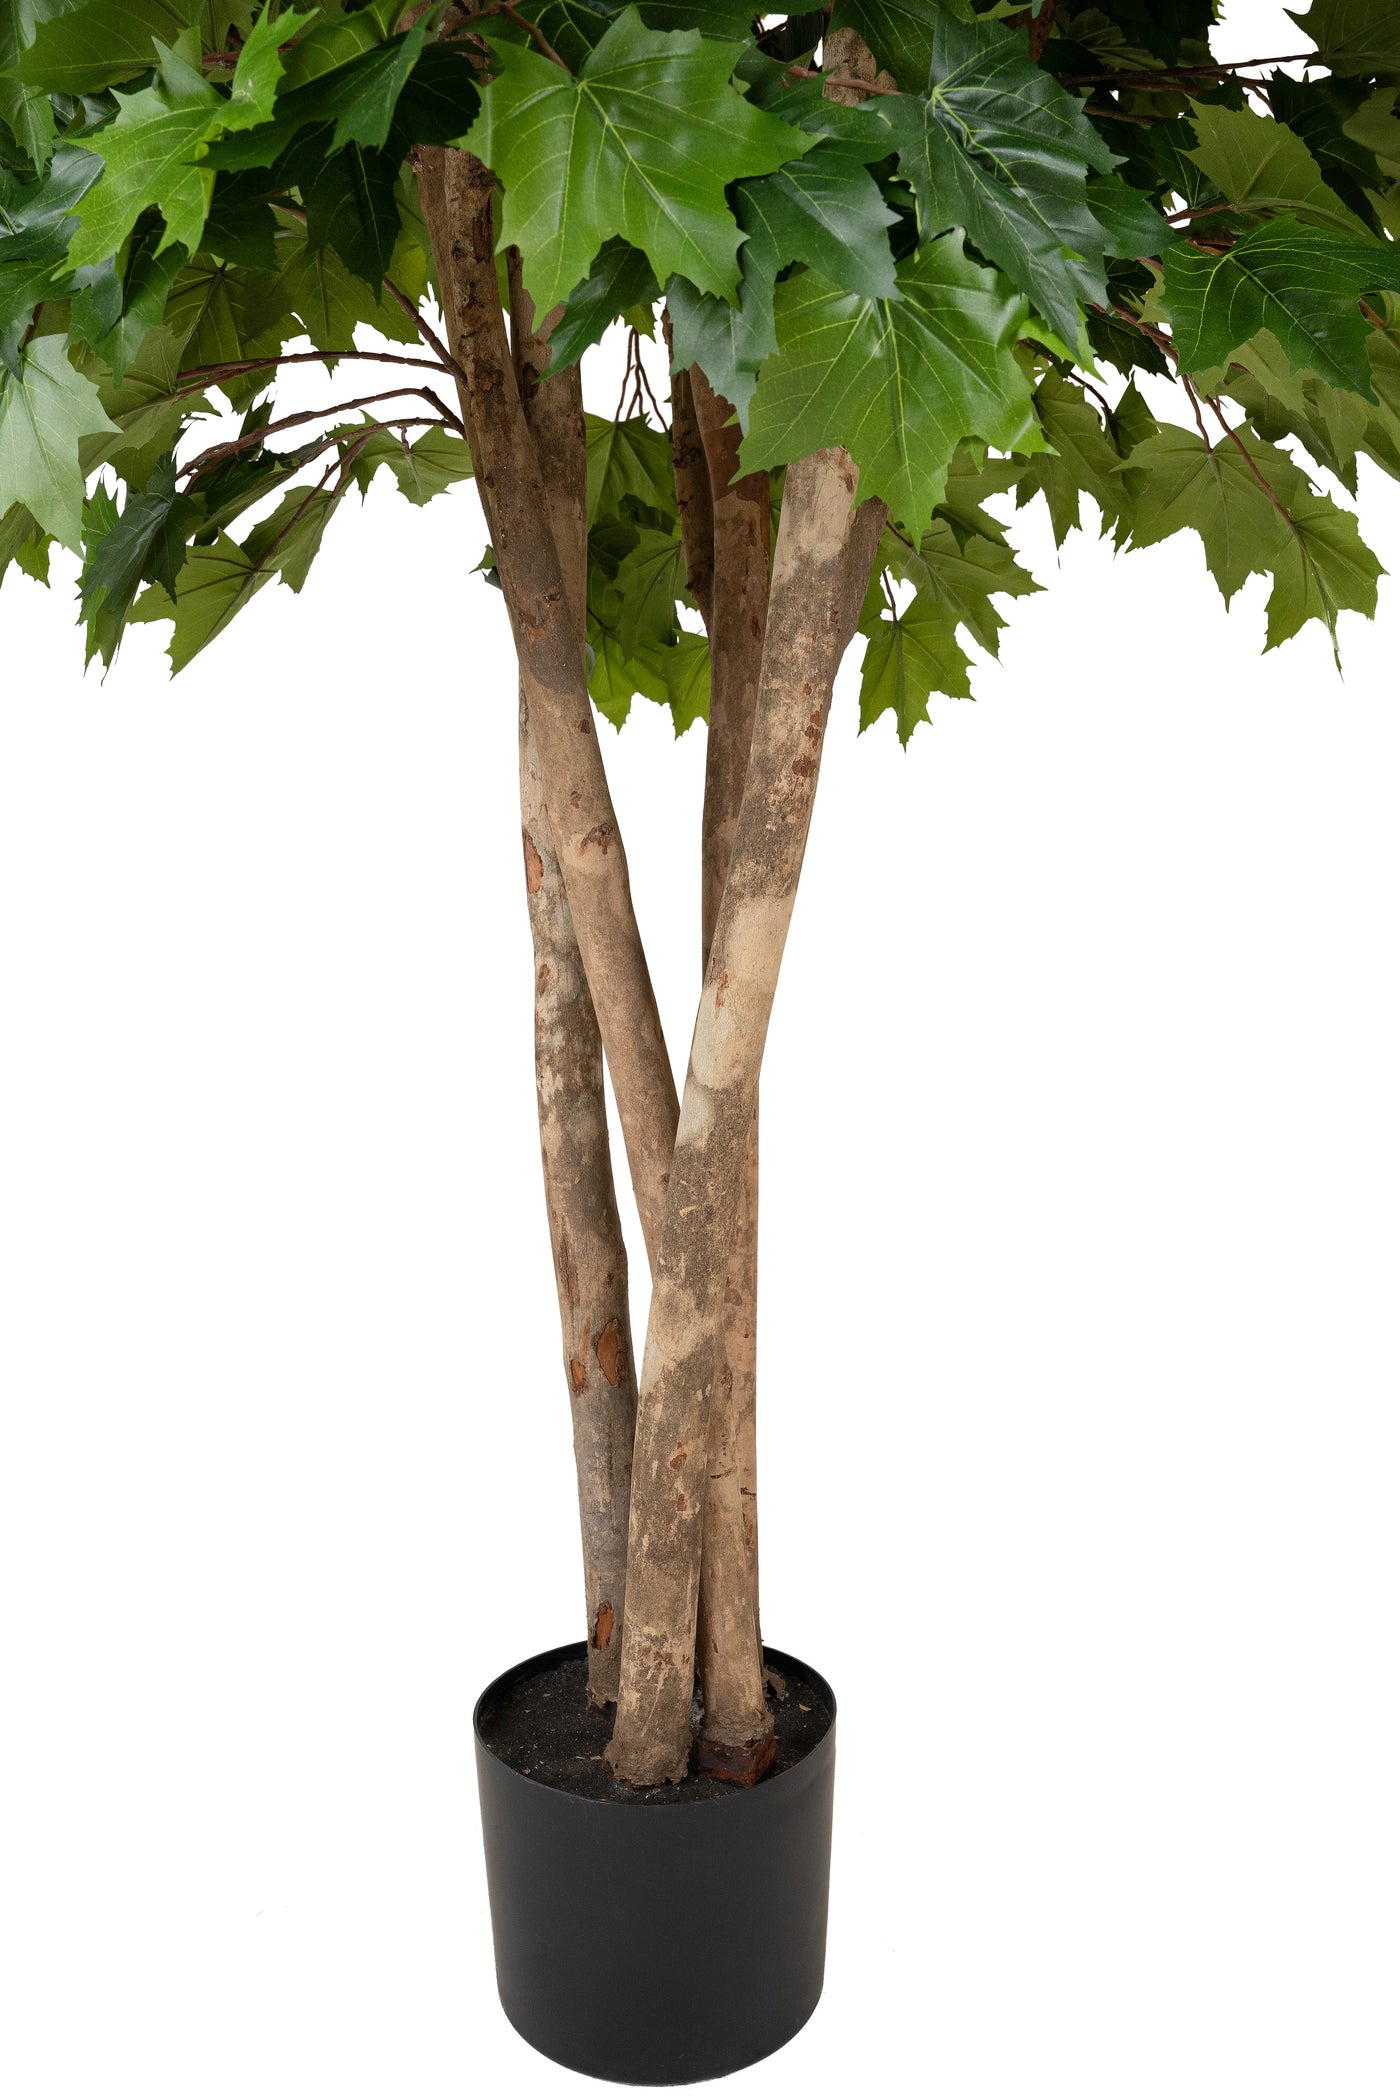 Copac artificial H250cm Artar cu trunchiuri multiple cu 1040 frunze, coroana D140cm